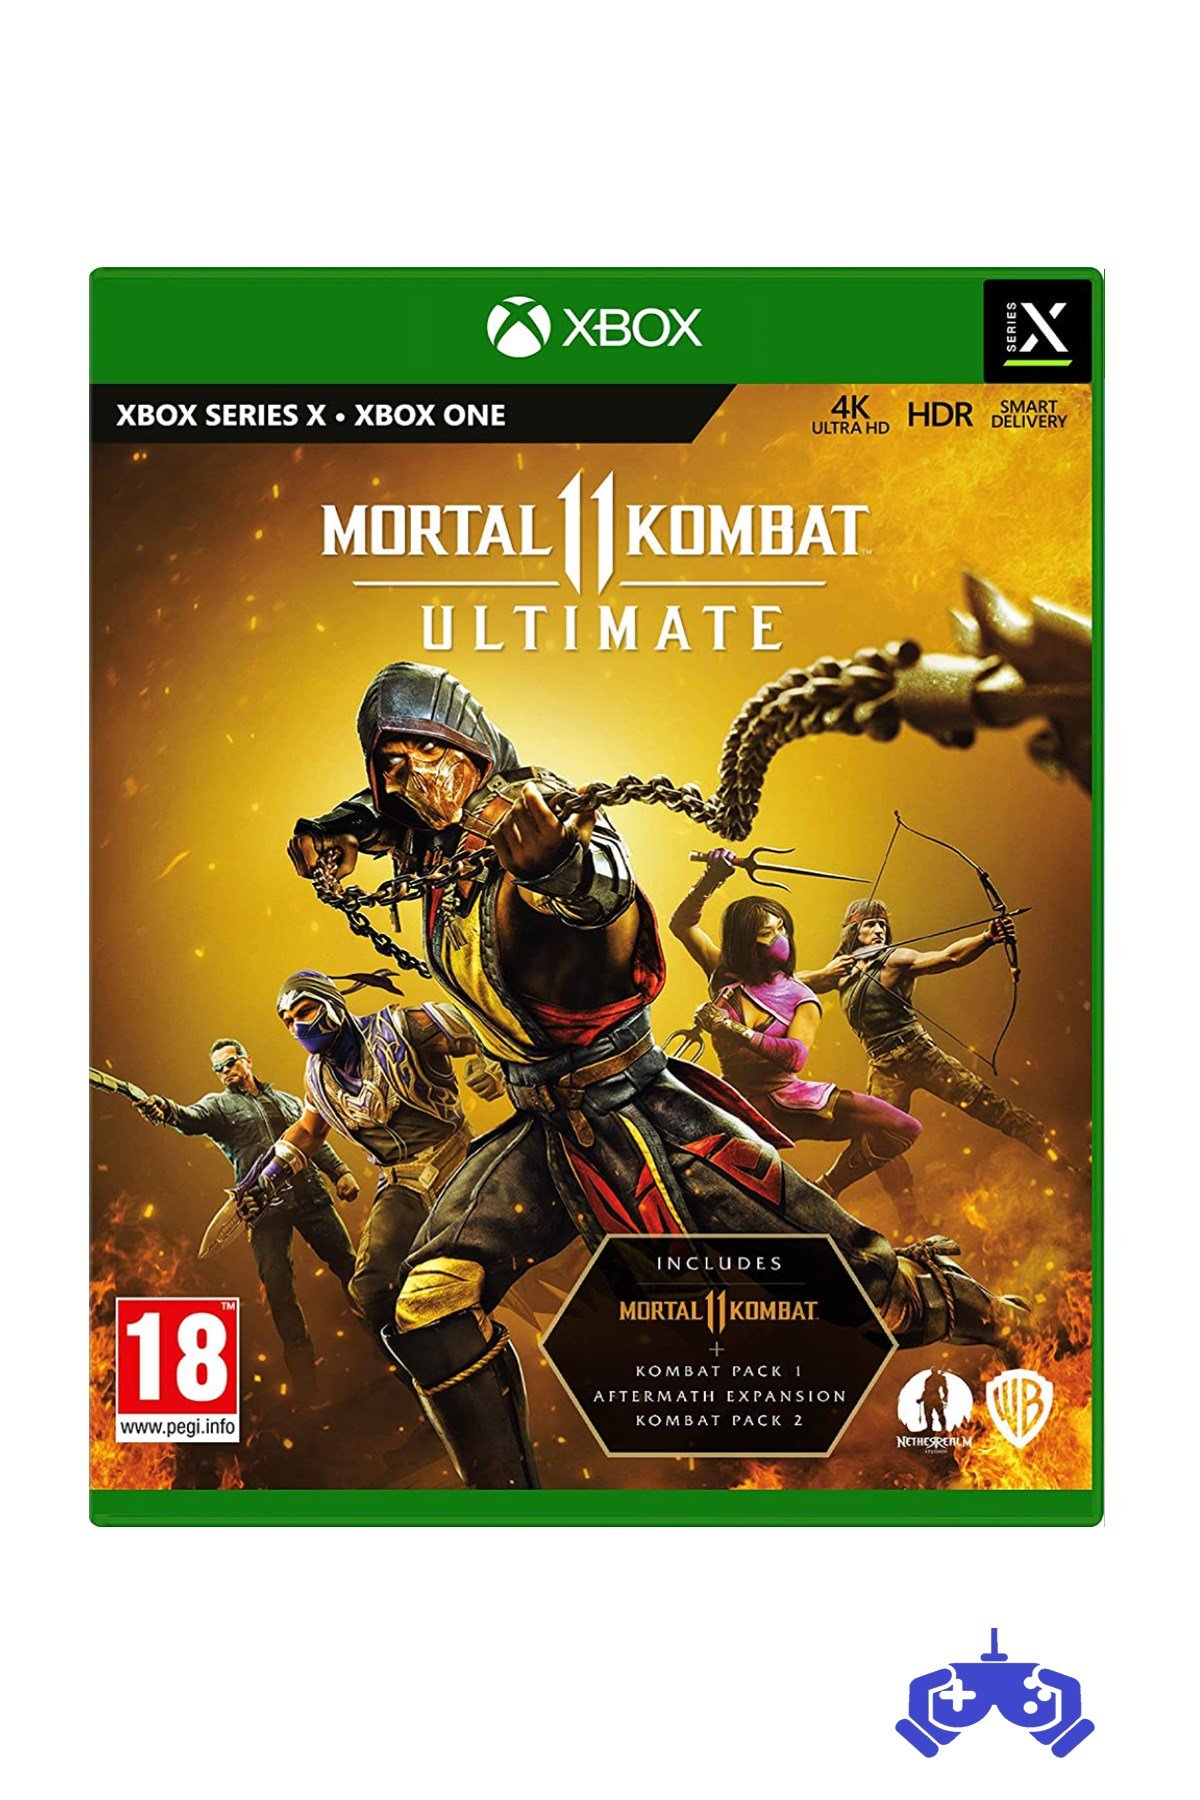 Allergie sympathie Hoogland Mortal Kombat 11 Ultimate Xbox Fiyatı | Start Oyunda İndirimli Xbox Oyunları